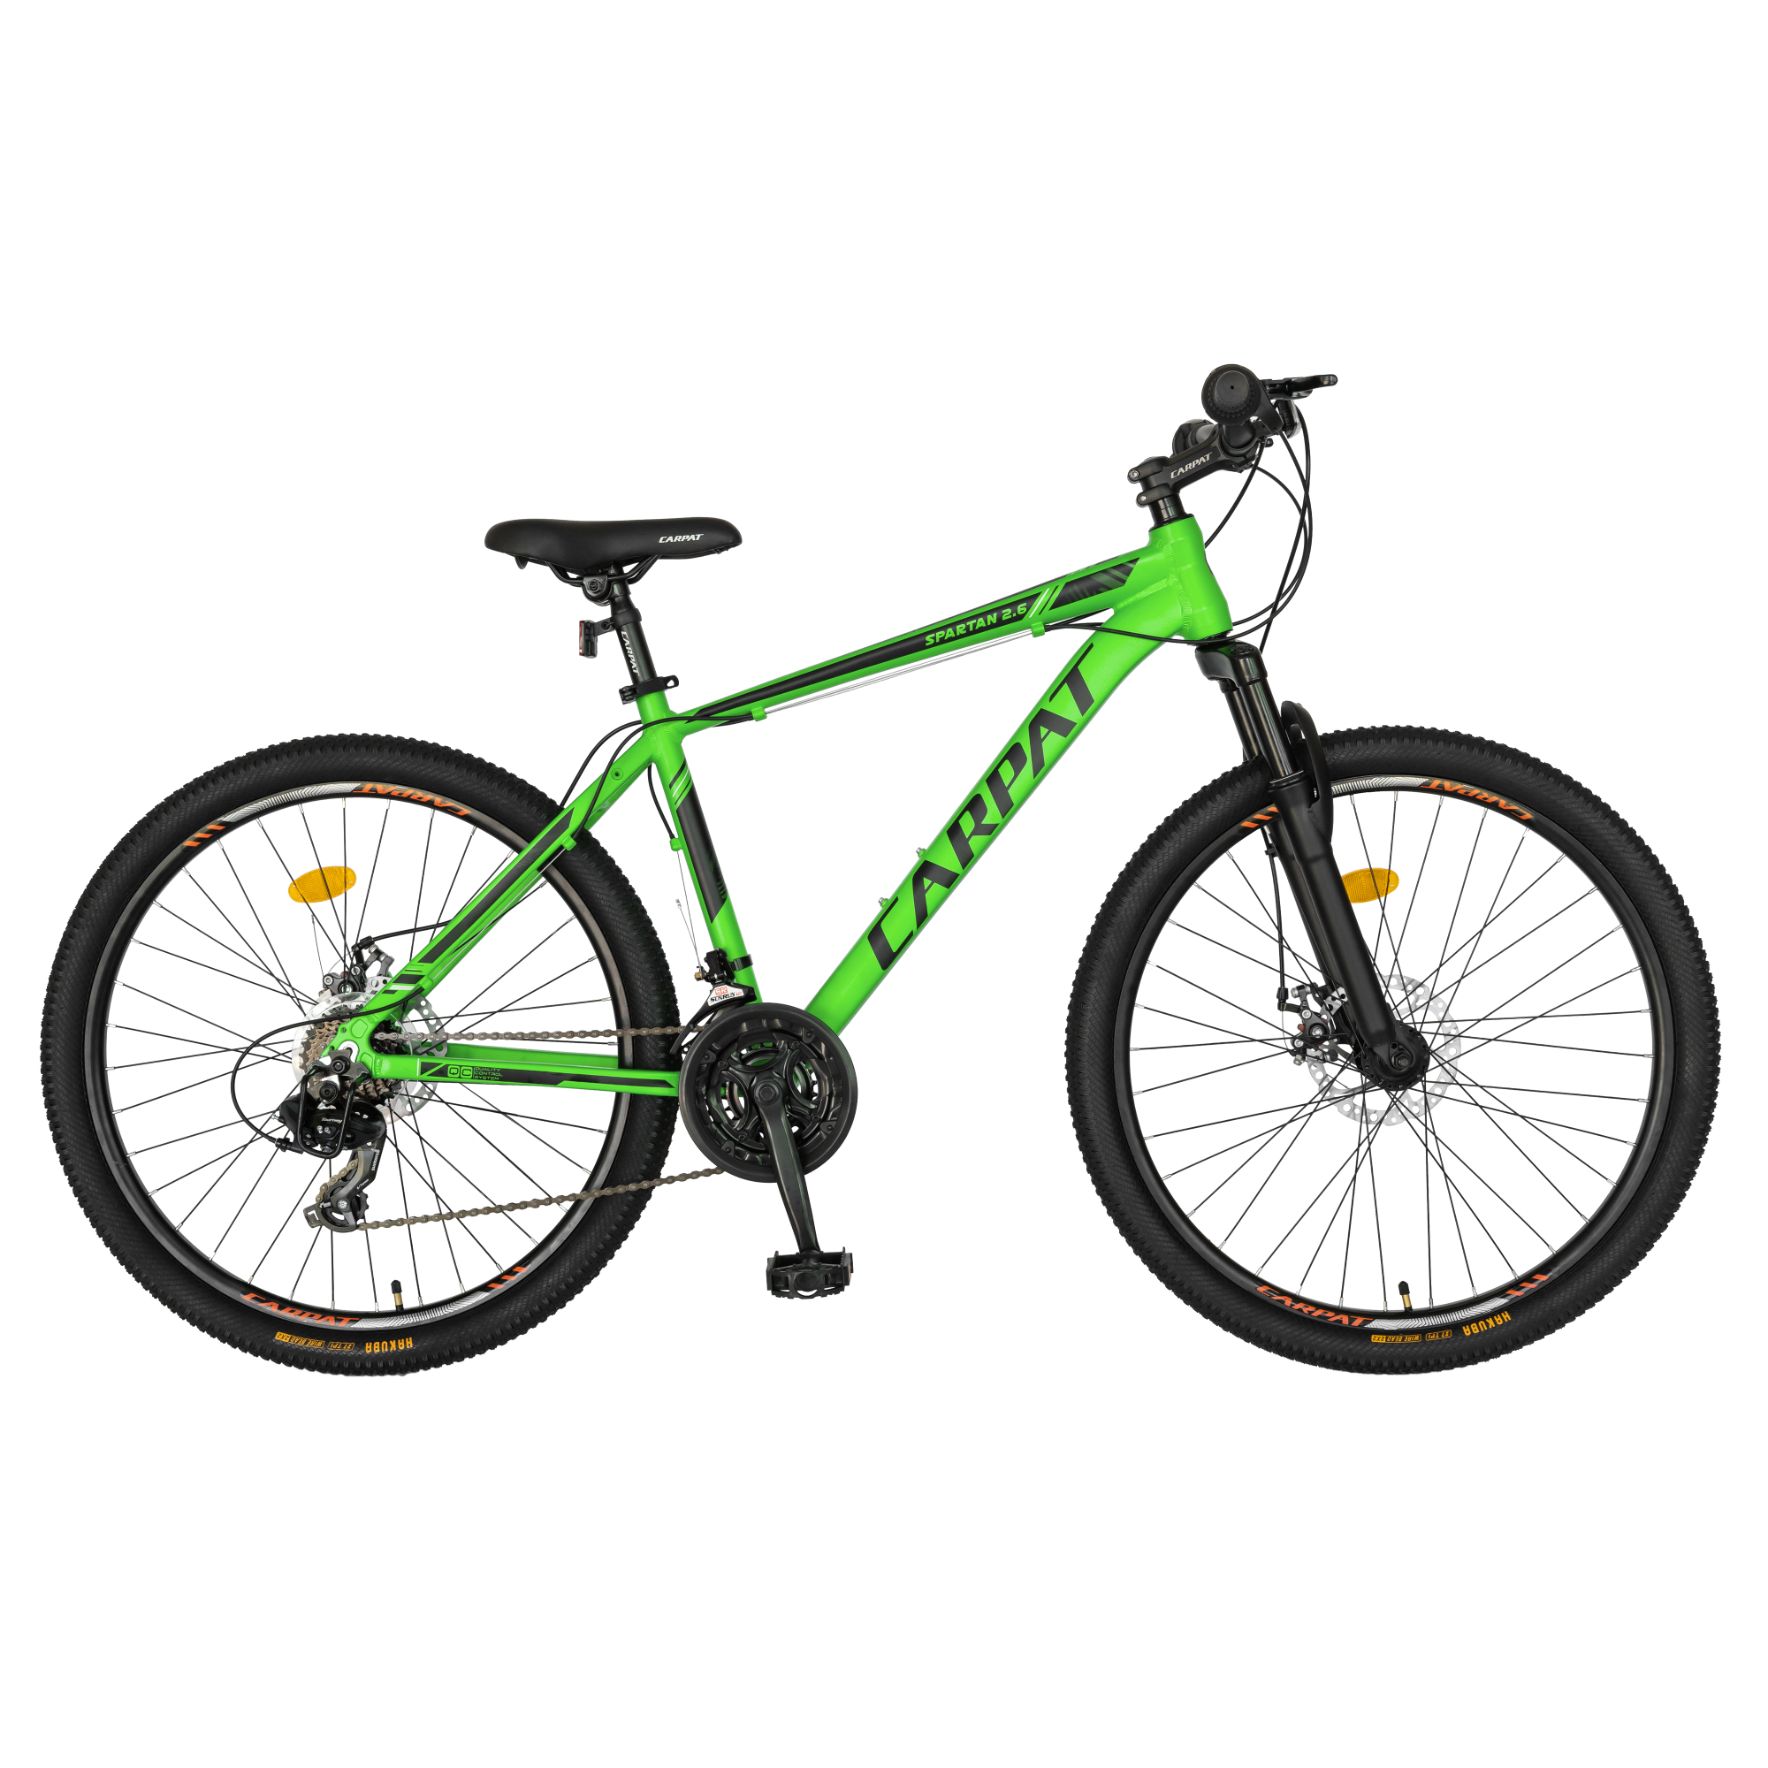 PROMO BICICLETE - Bicicleta MTB-HT Carpat Spartan C2758C 27.5", Verde/Negru, carpatsport.ro